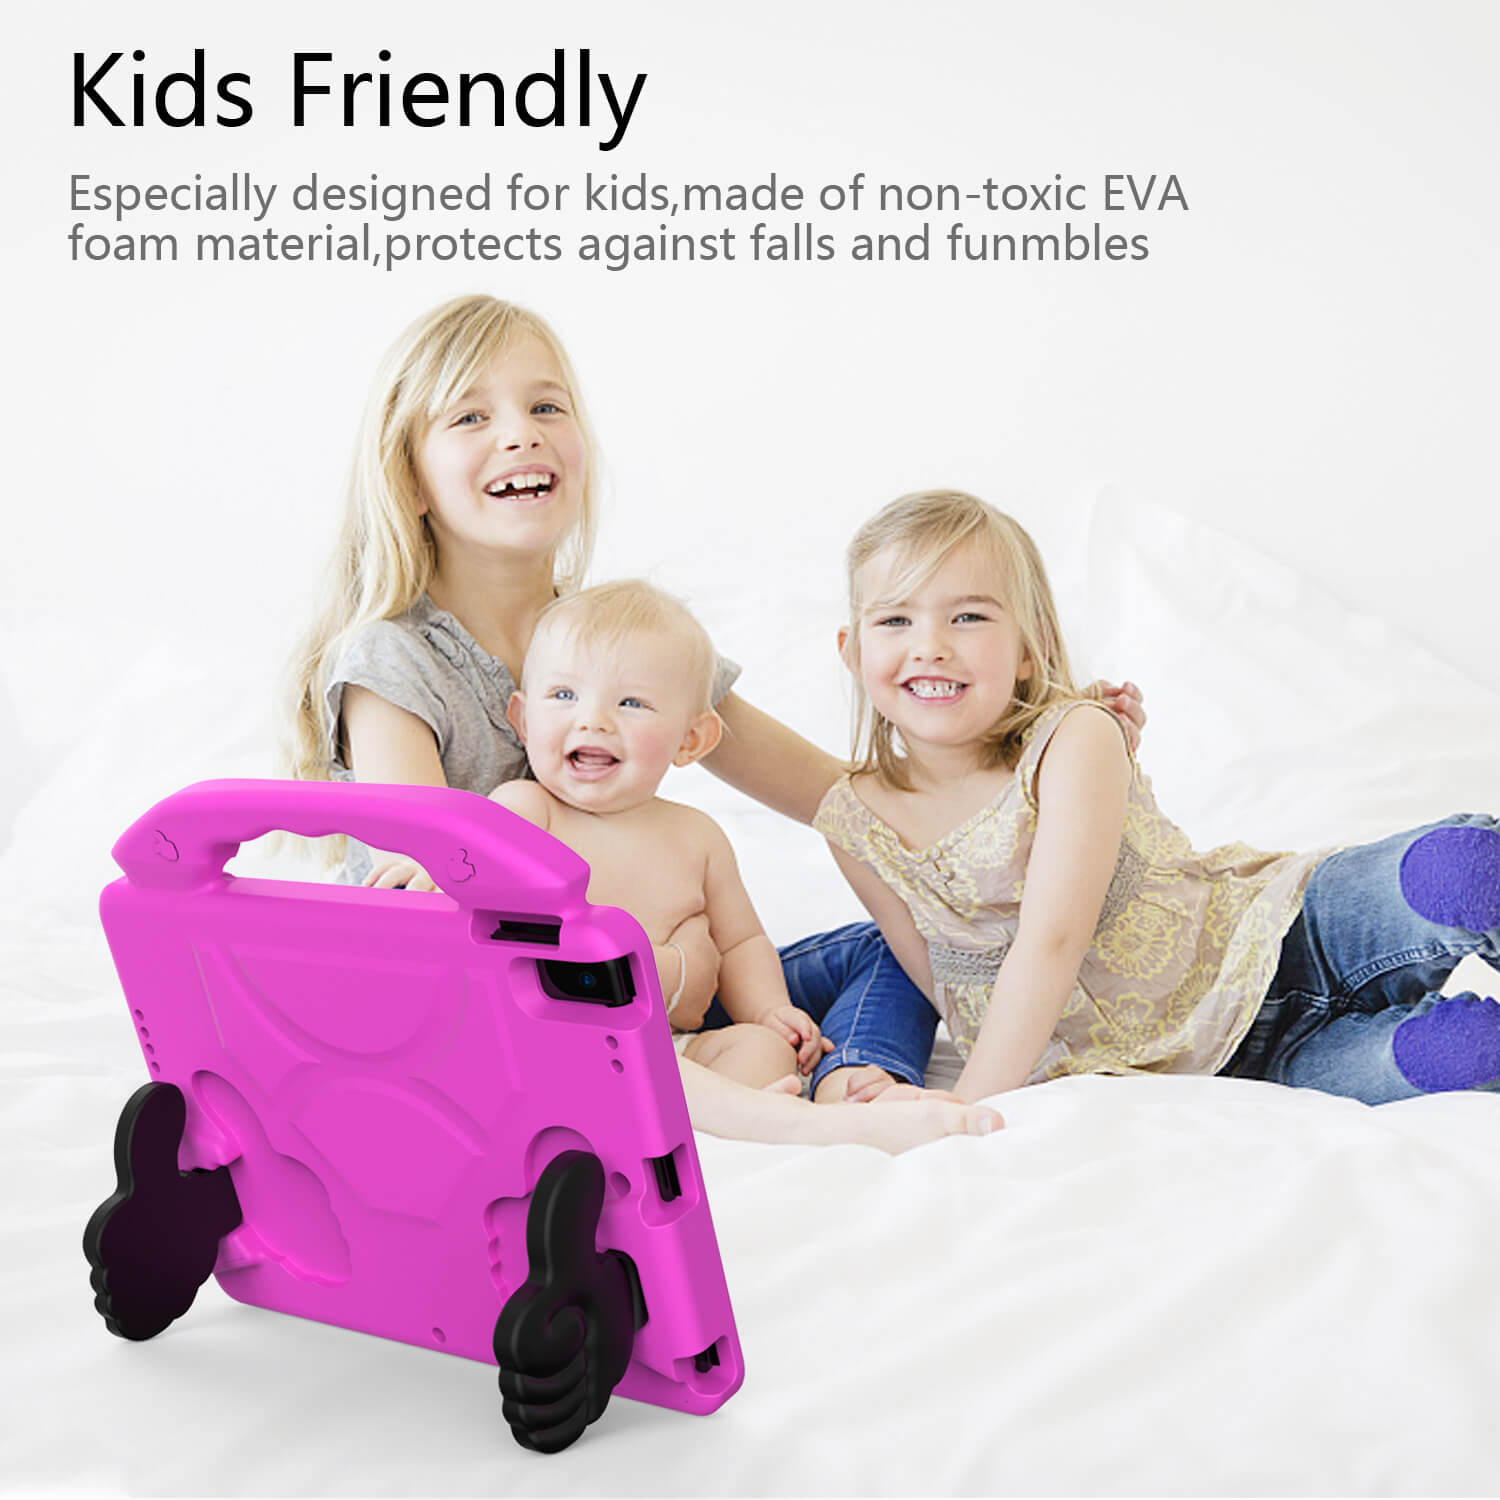 Tough On iPad 5 / 6th Gen 9.7" Case EVA Kids Protection Hot Pink